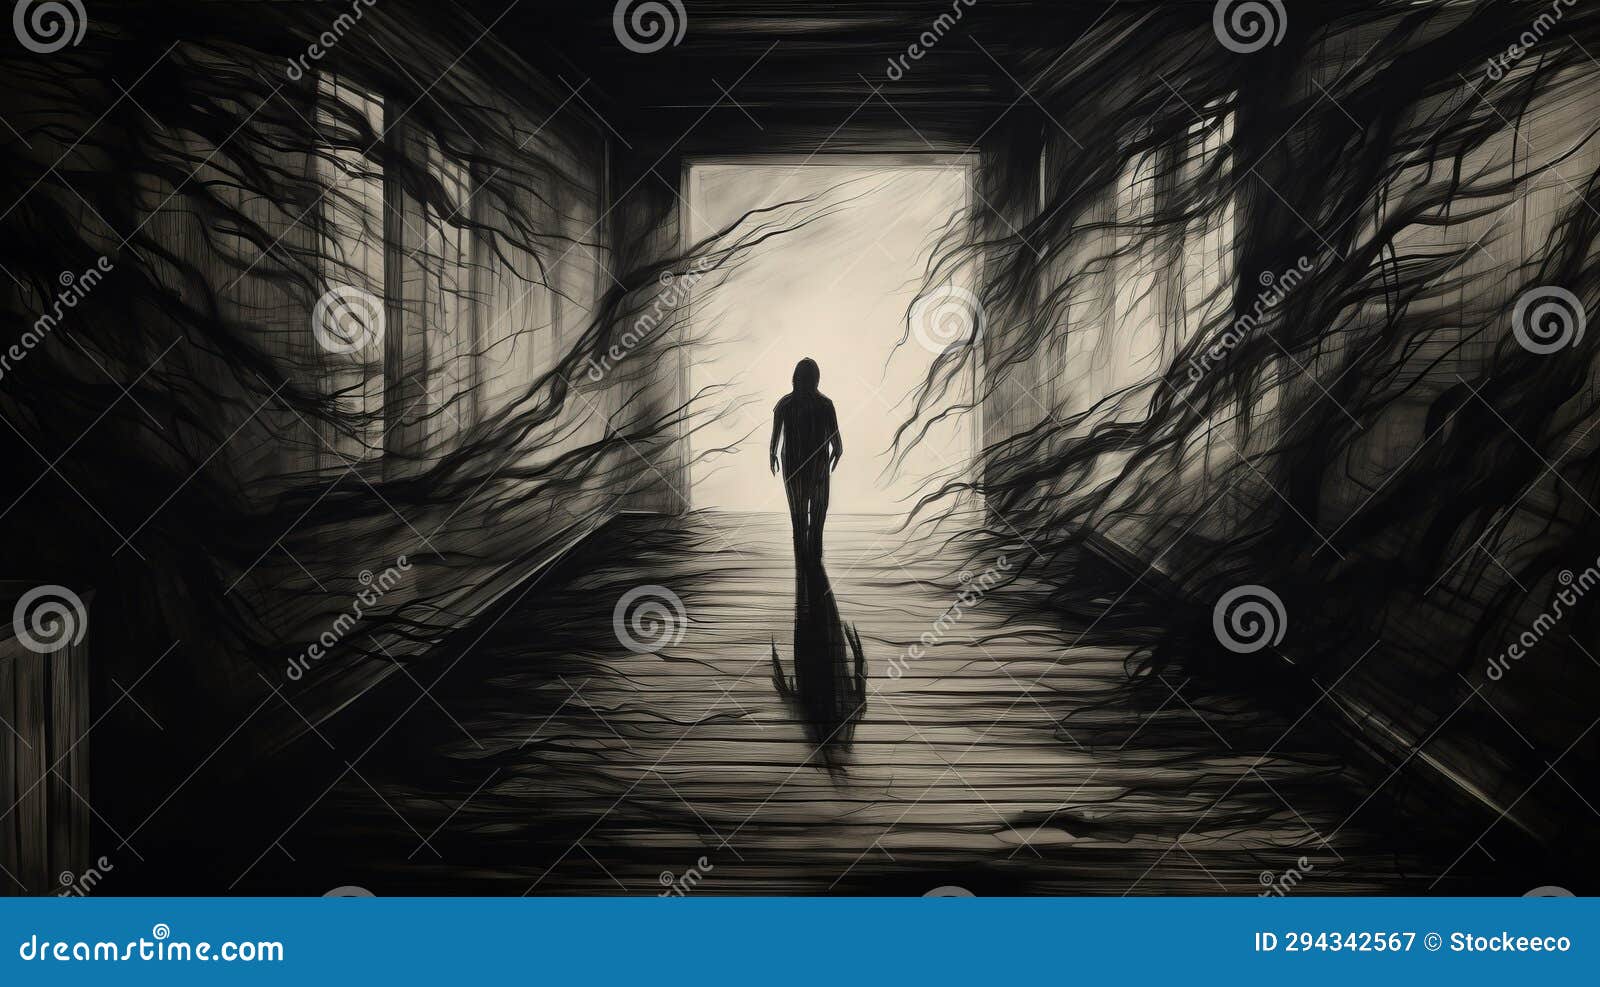 dark shadowed man a speedpainting journey through monochromatic landscapes